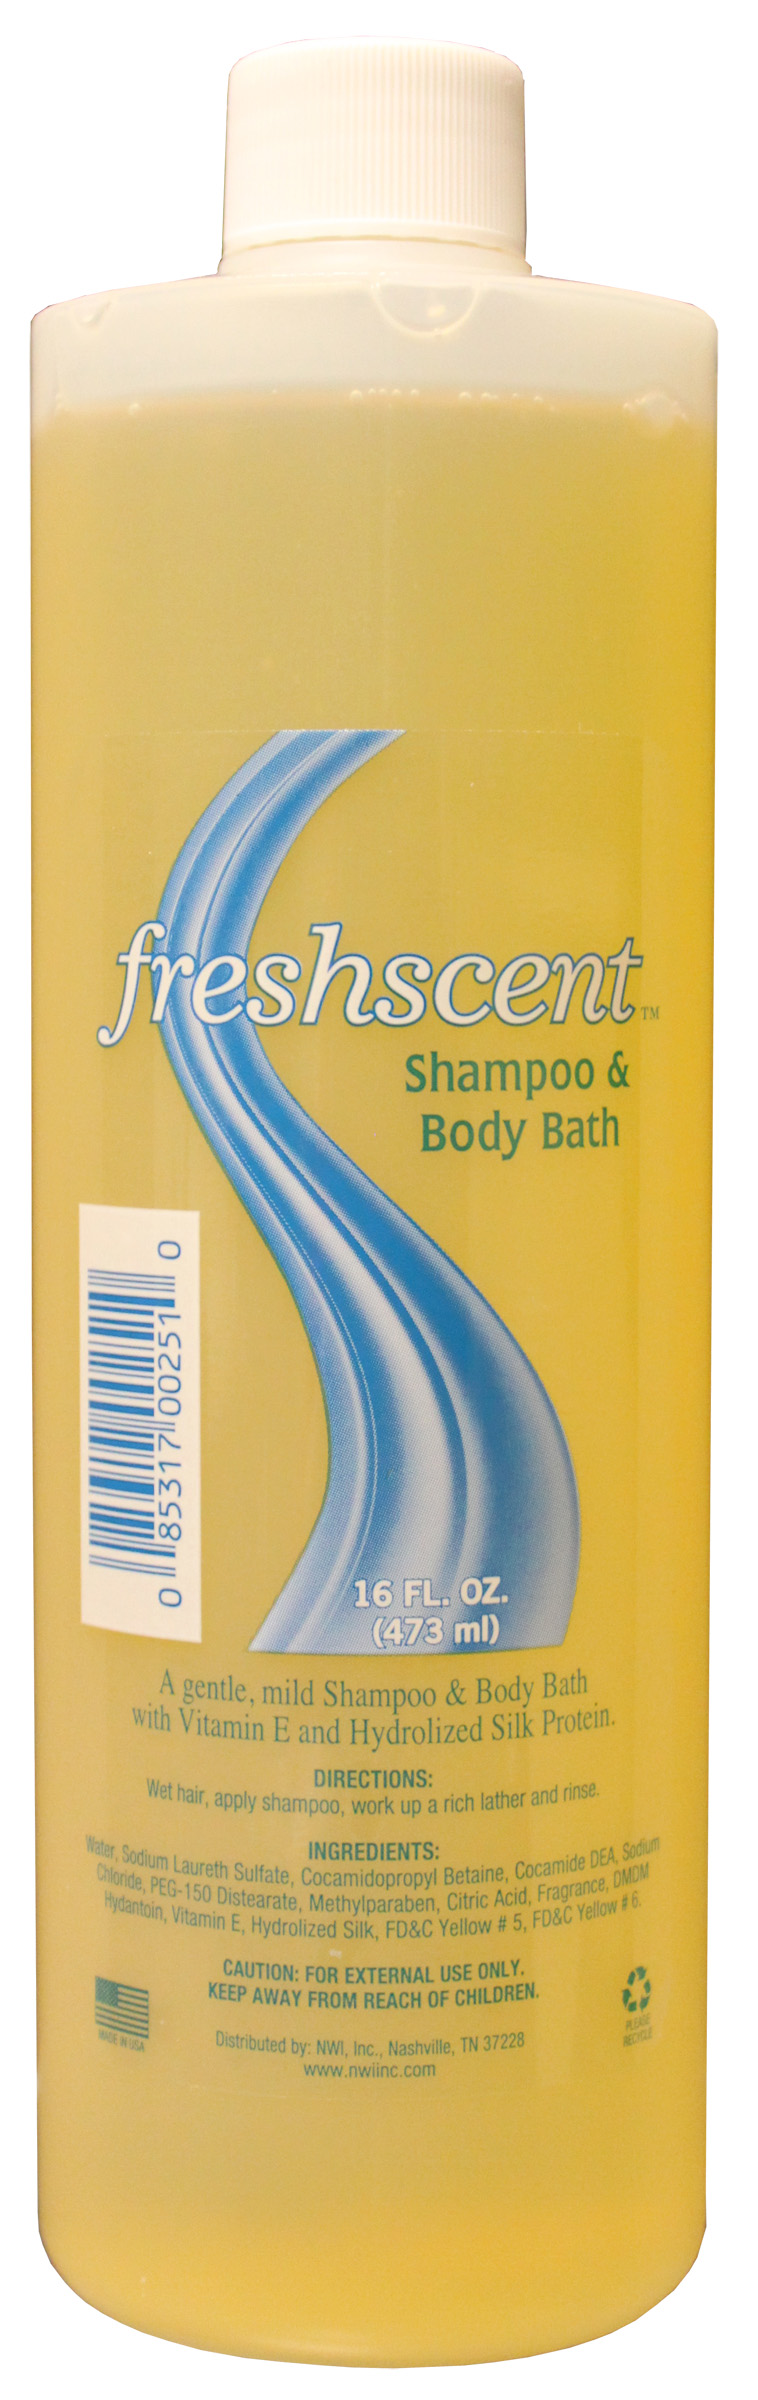 Freshscent 16 oz. Shampoo & Body Wash